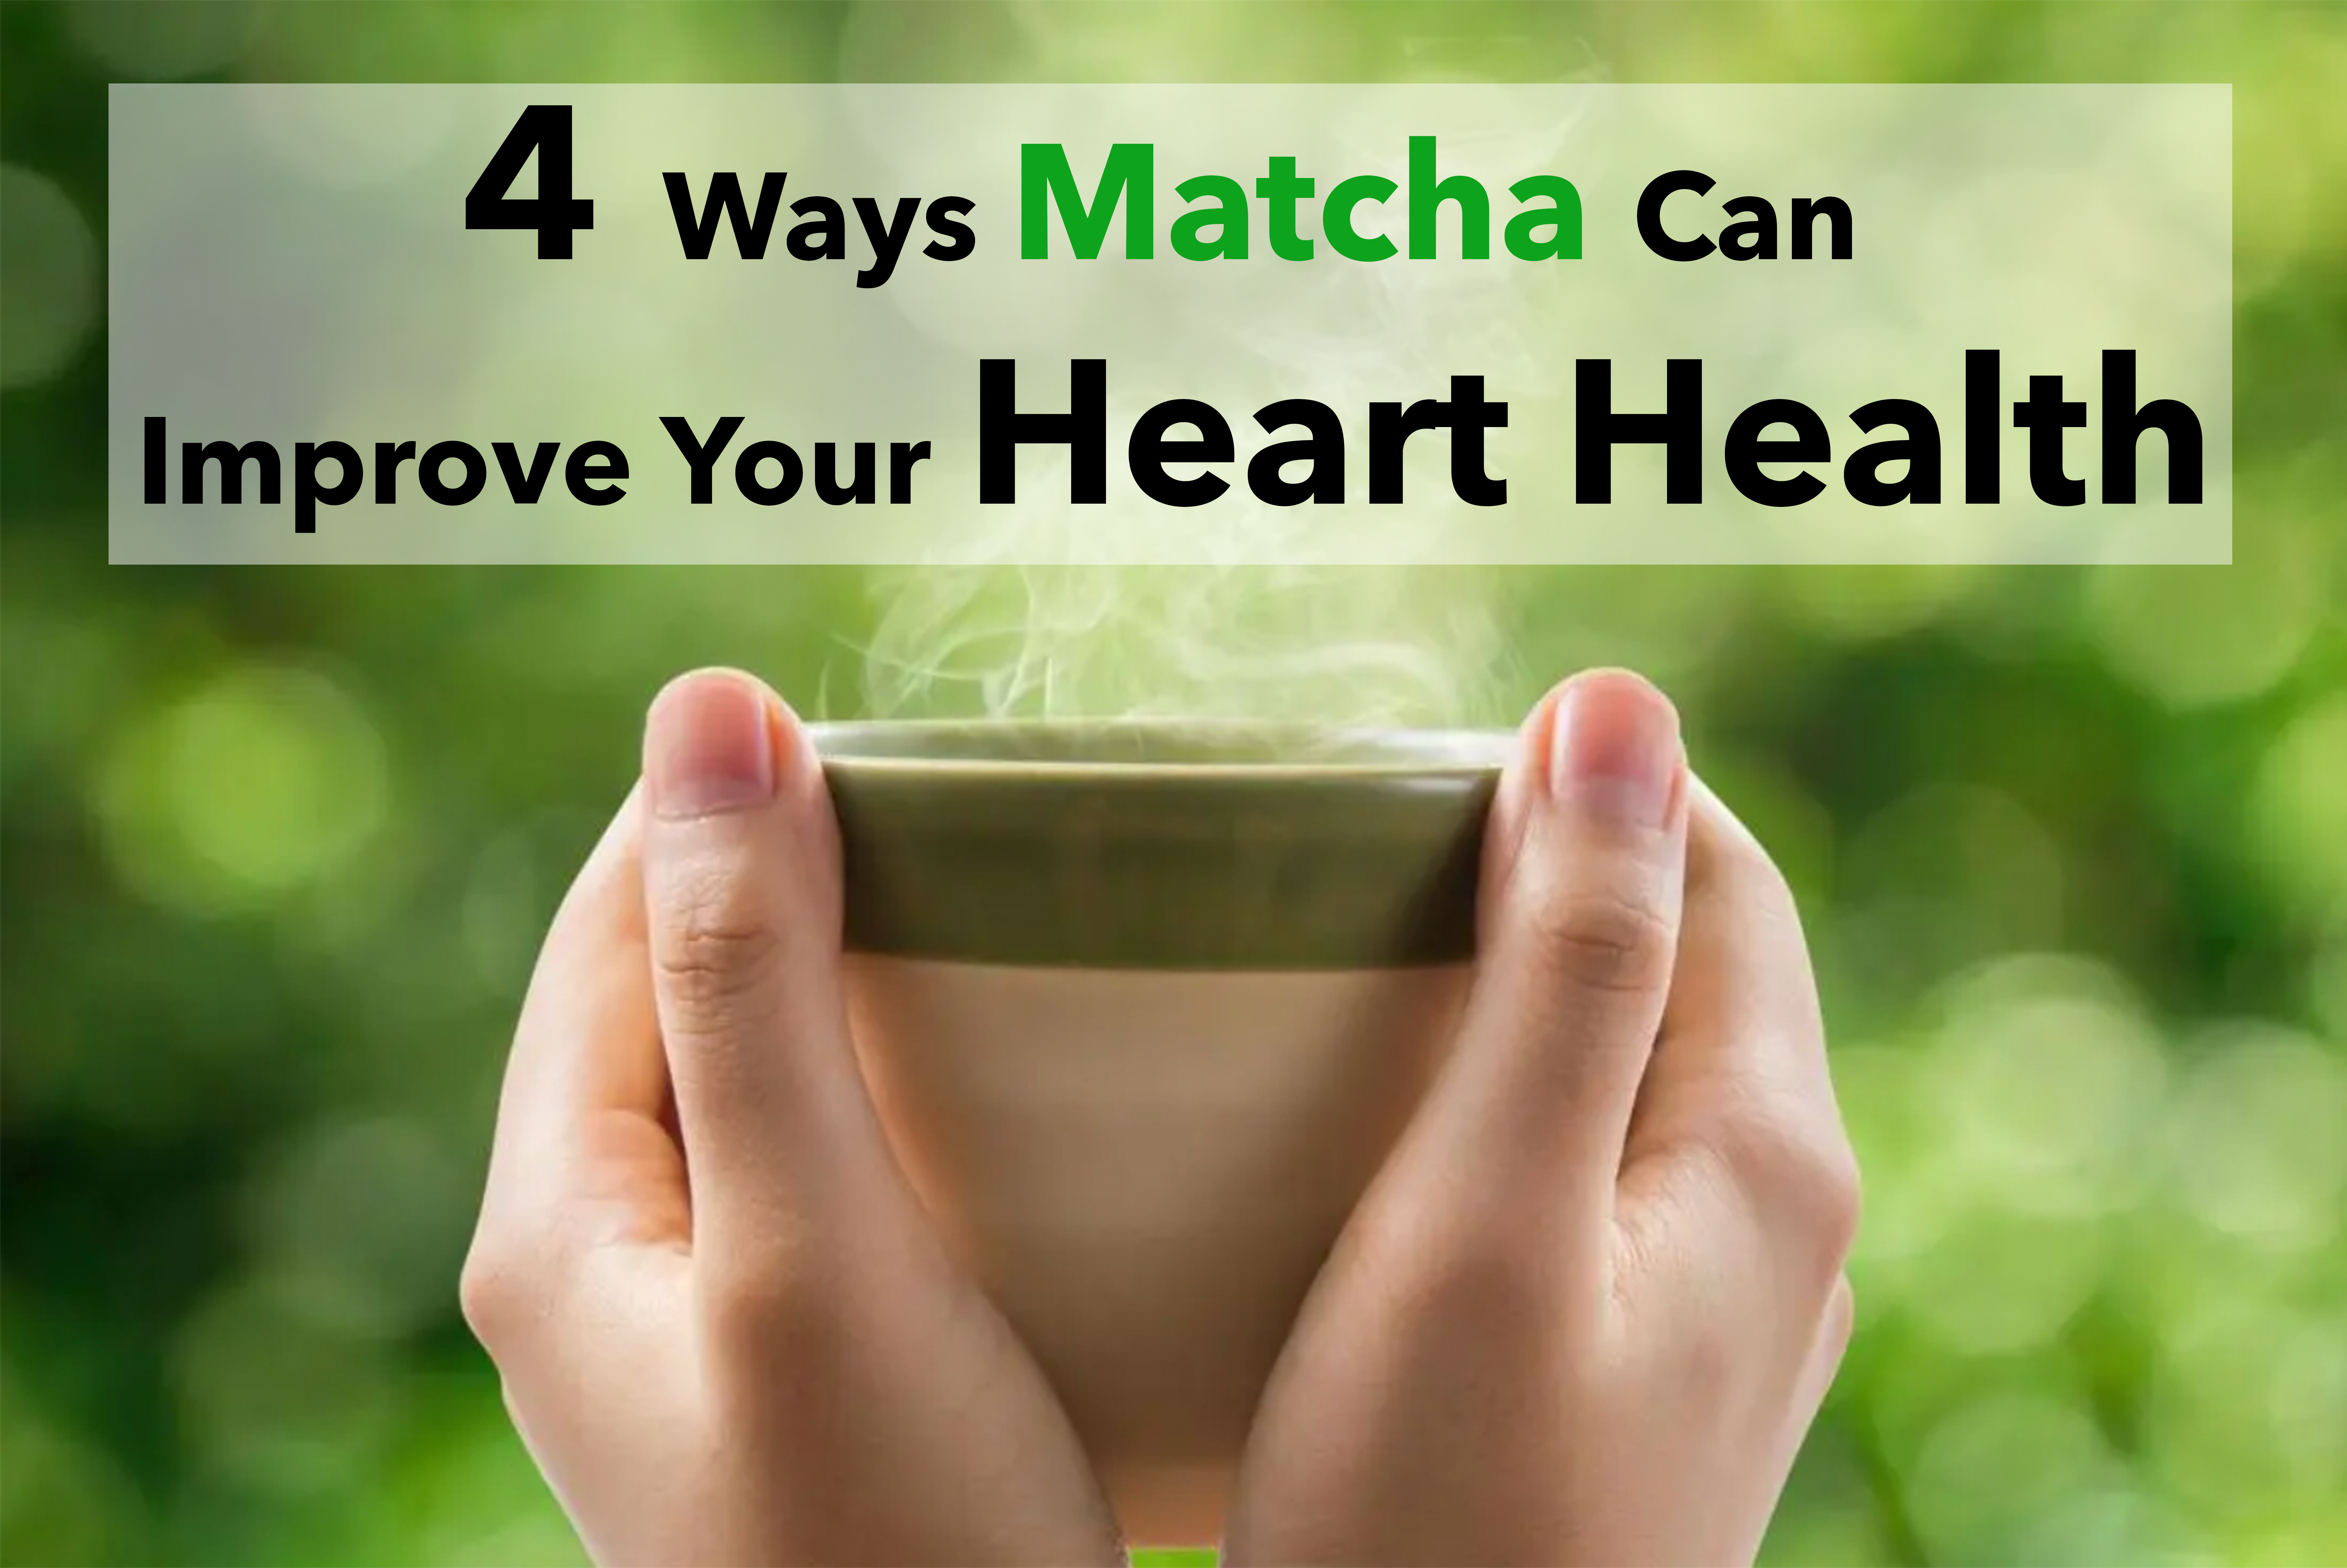 4 ways matcha can Help with heart health